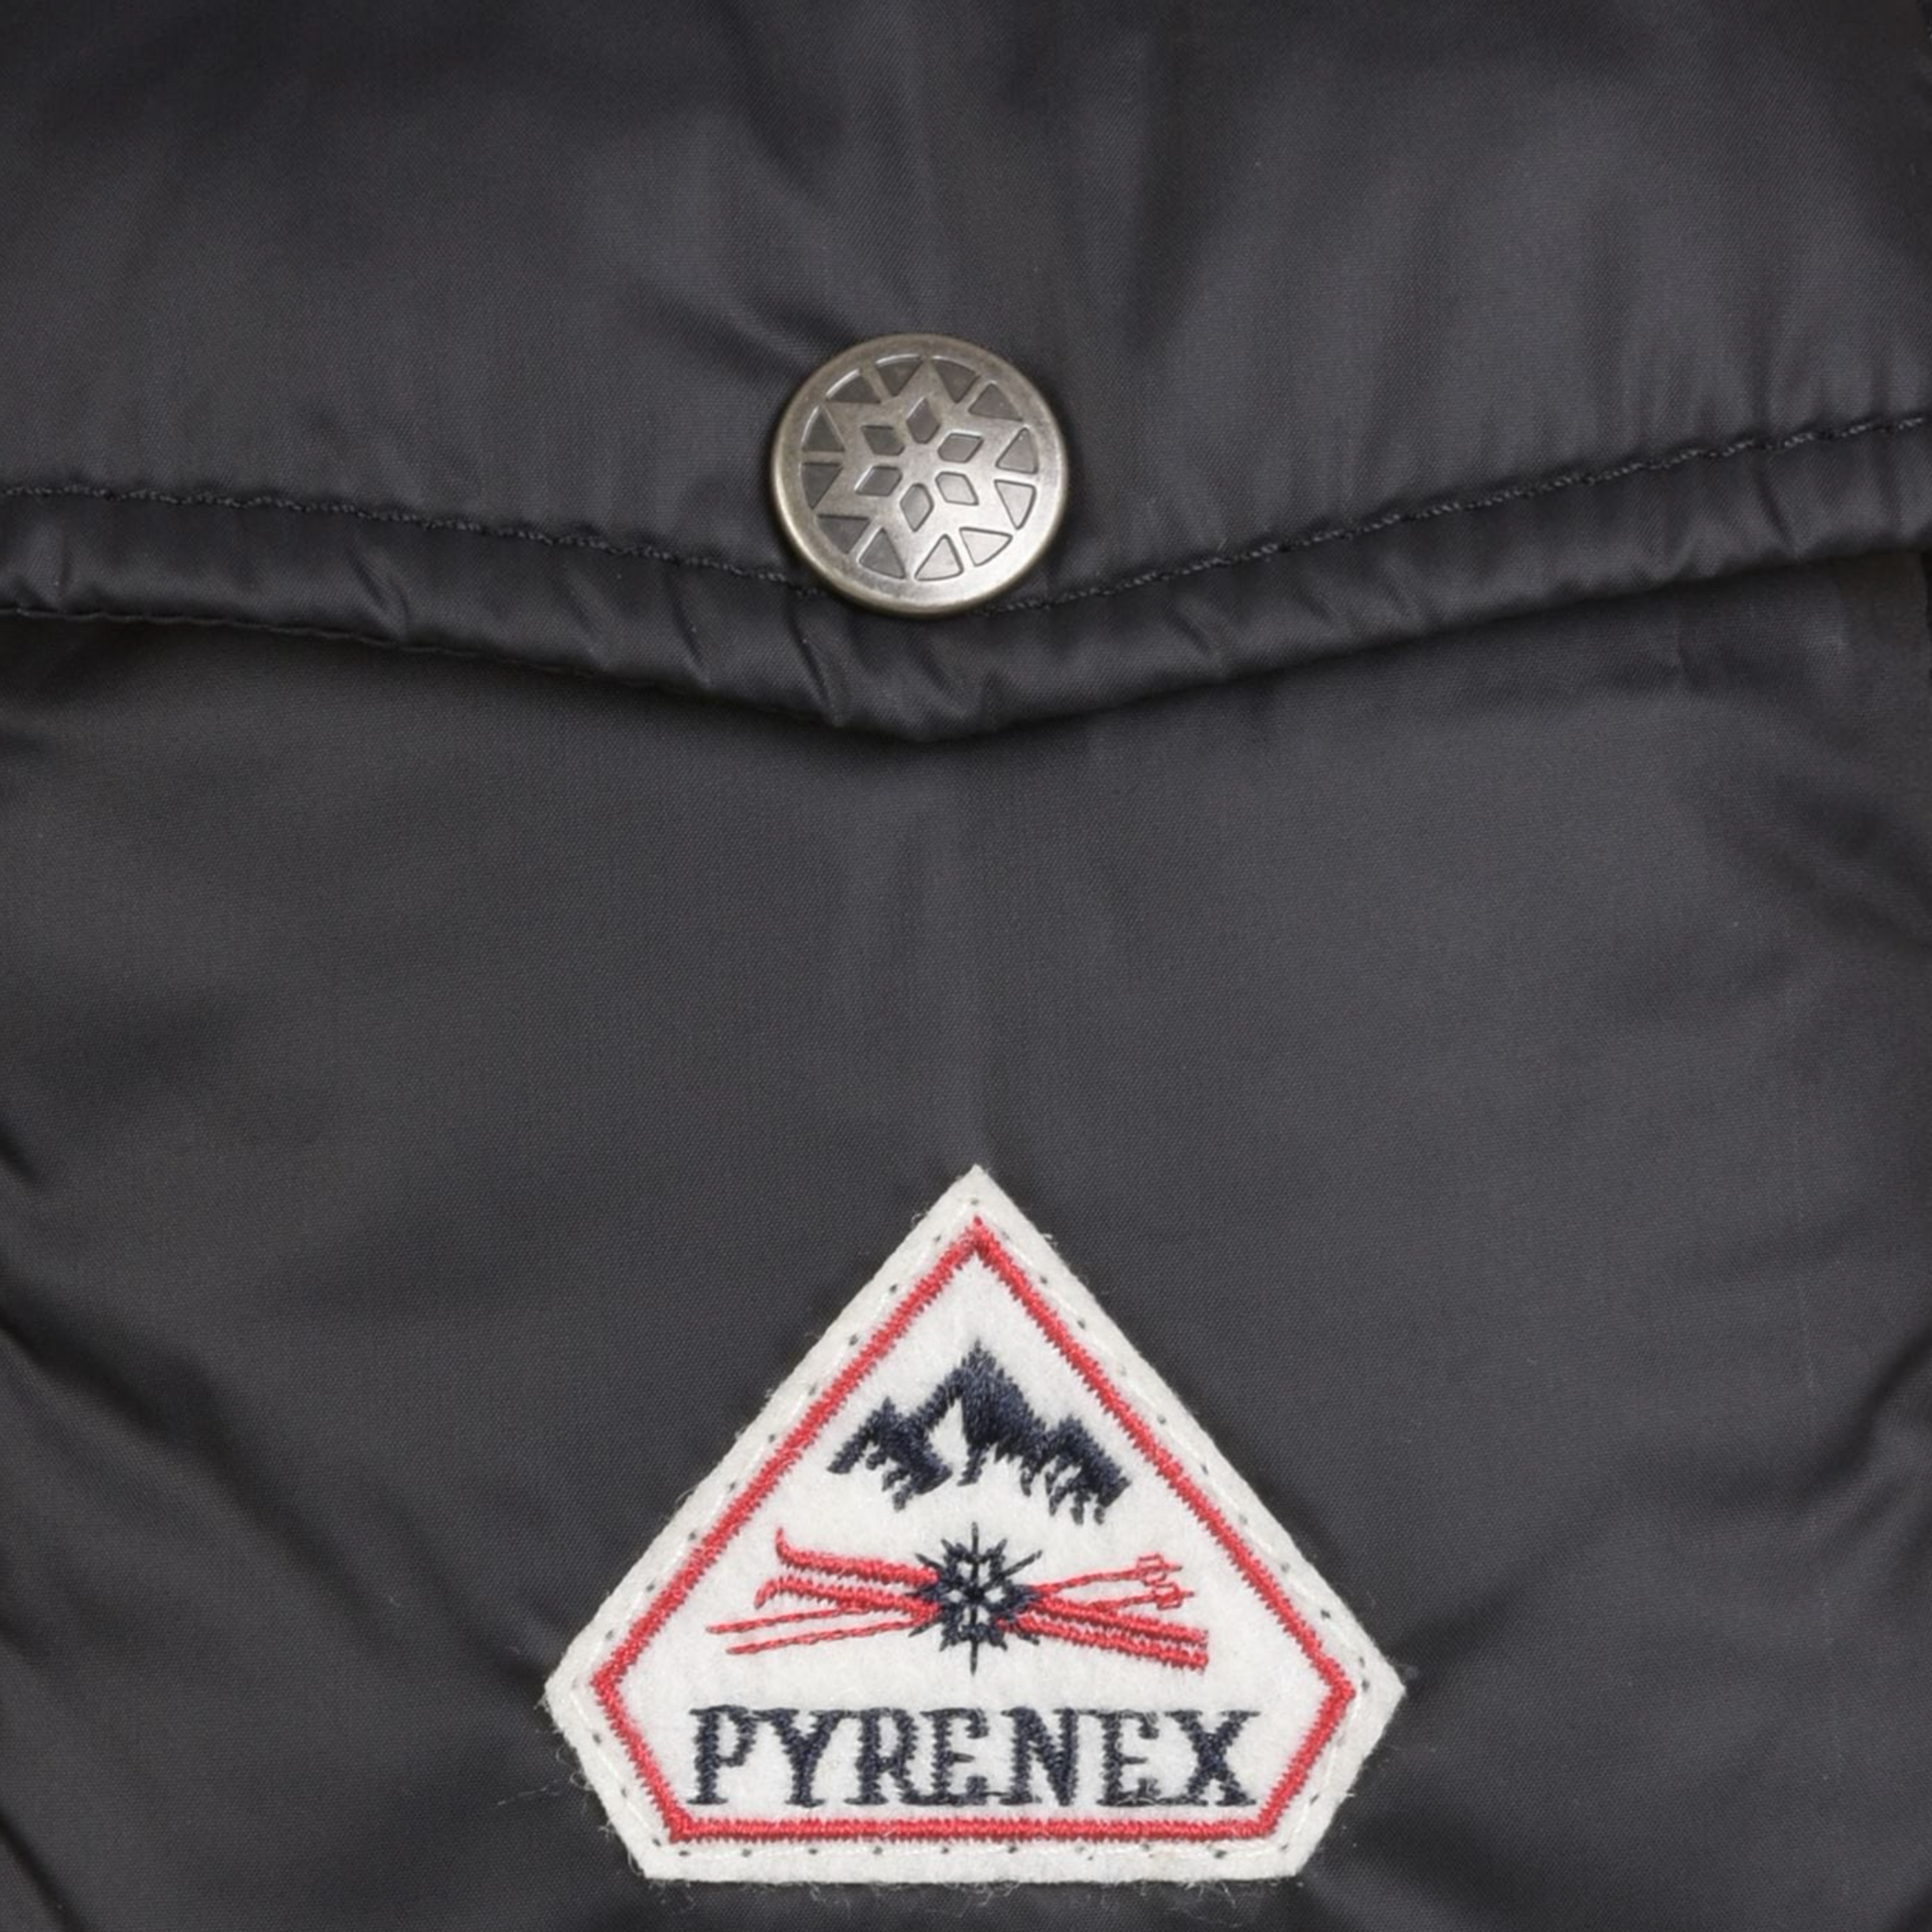 Pyrenex Matt Down Jacket - DANYOUNGUK